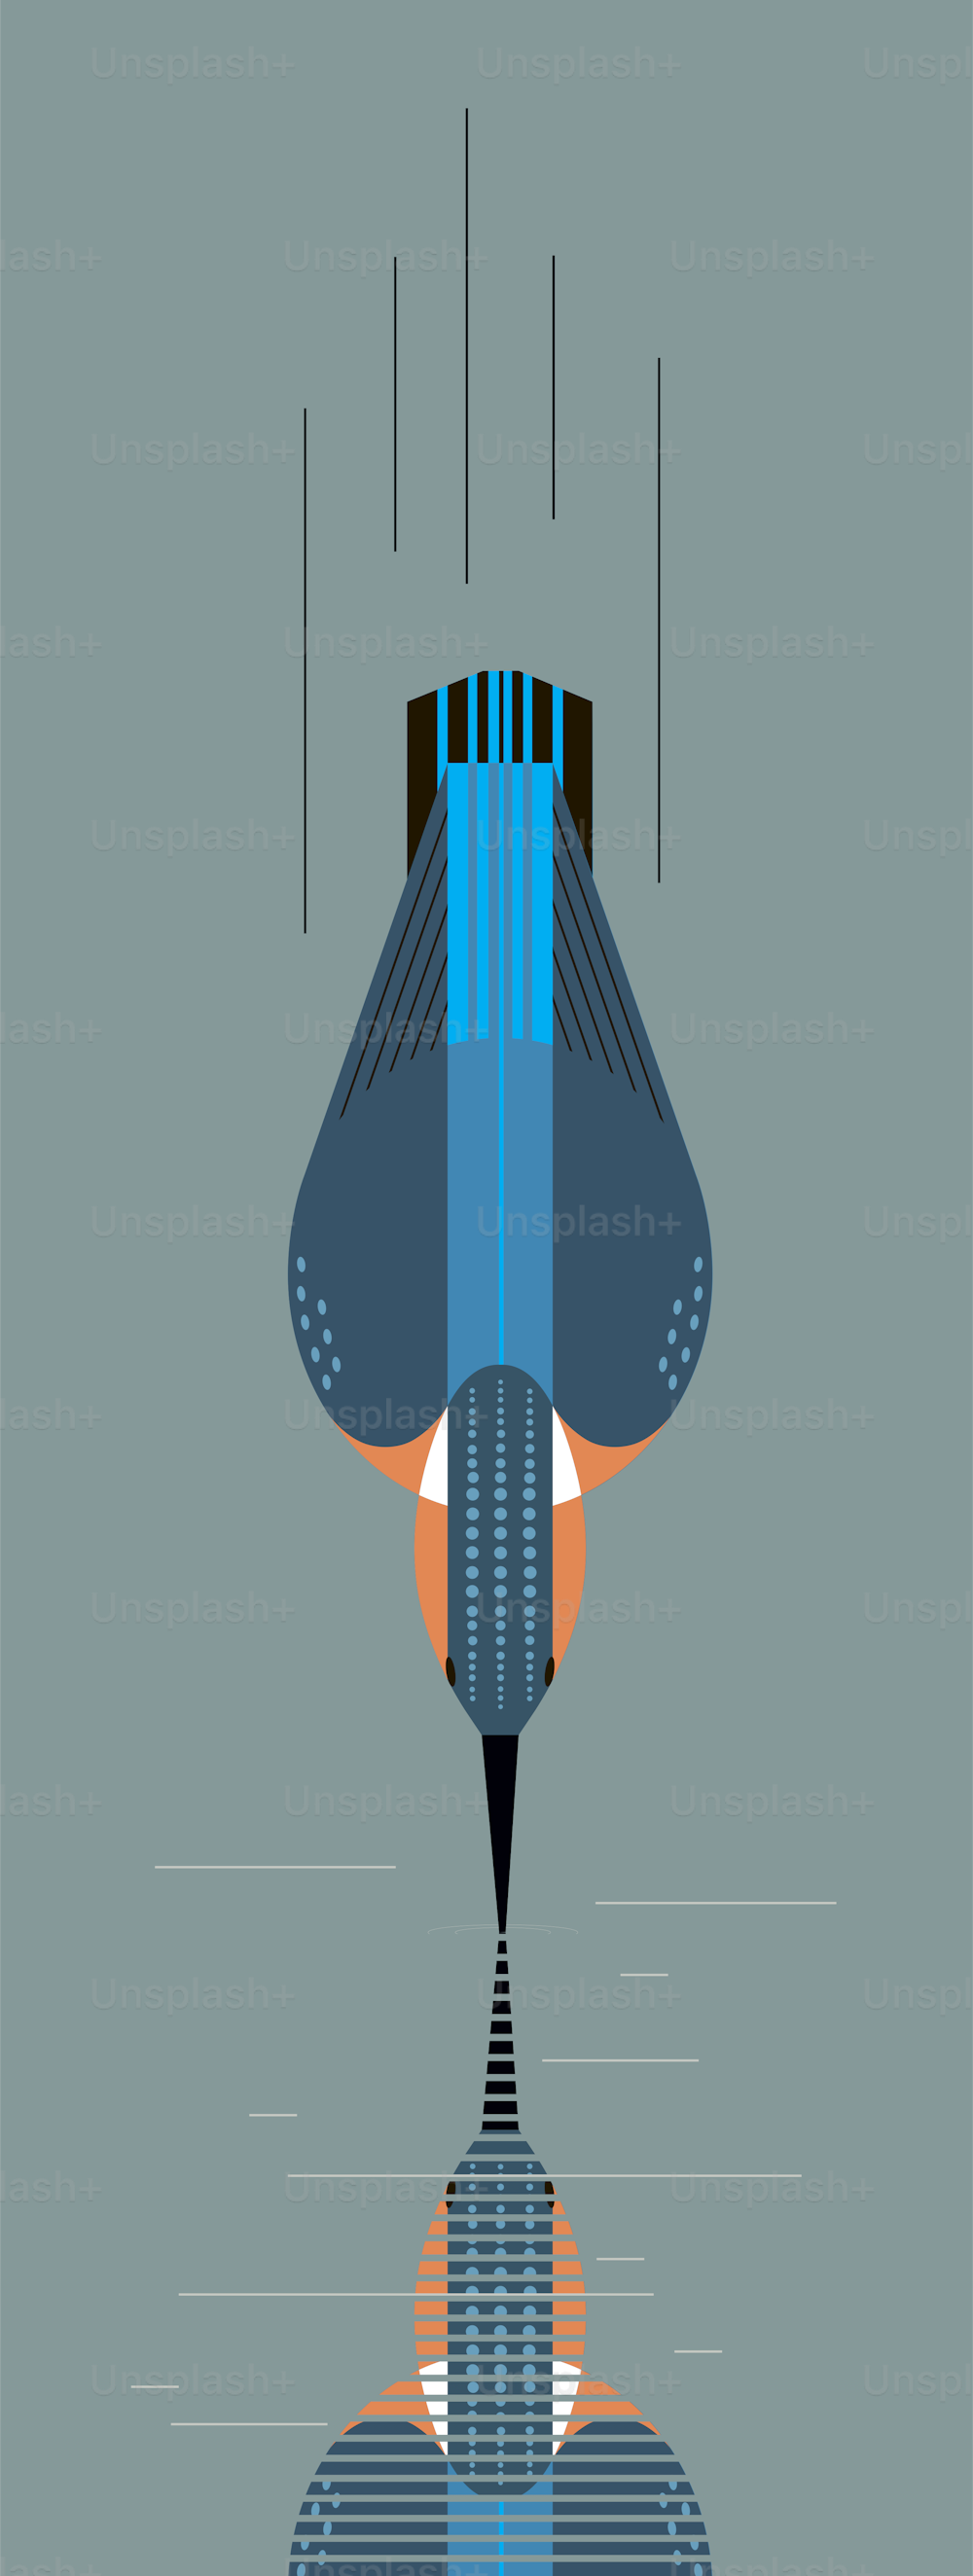 Kingfisher mergulha para presas, estilo geométrico minimalista